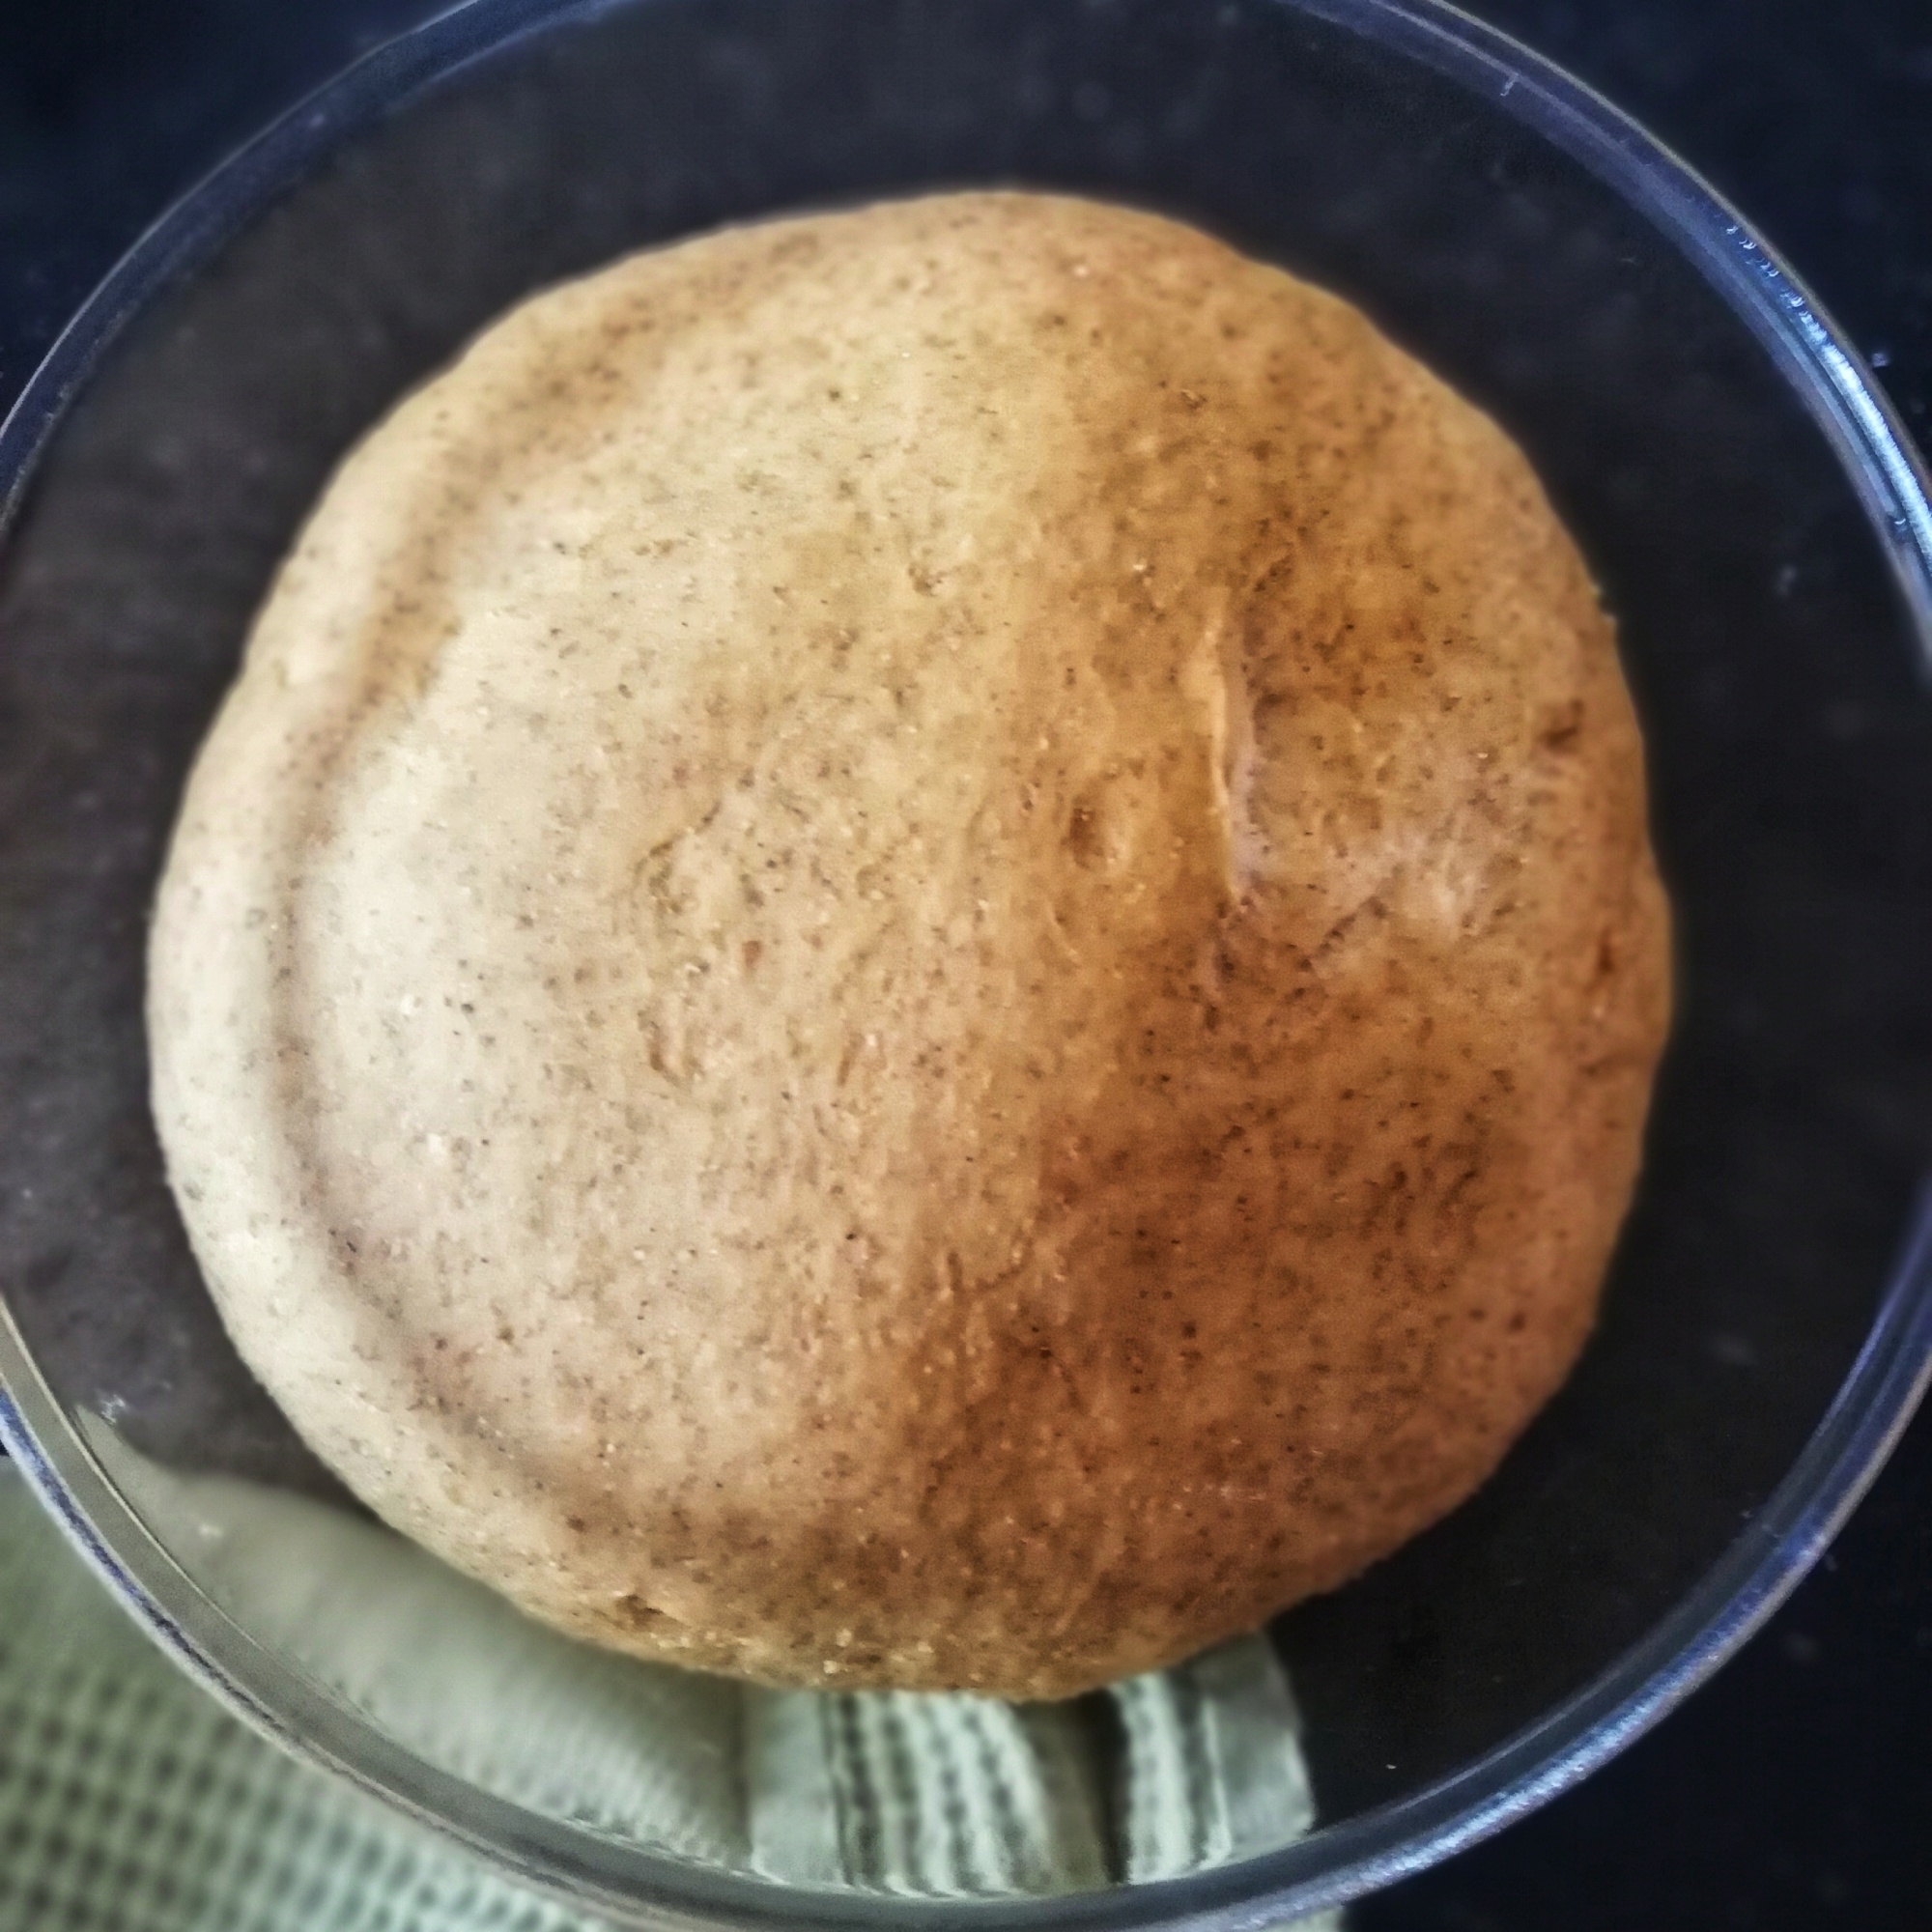 Food photography,Proving hot cross bun dough,in class bowl